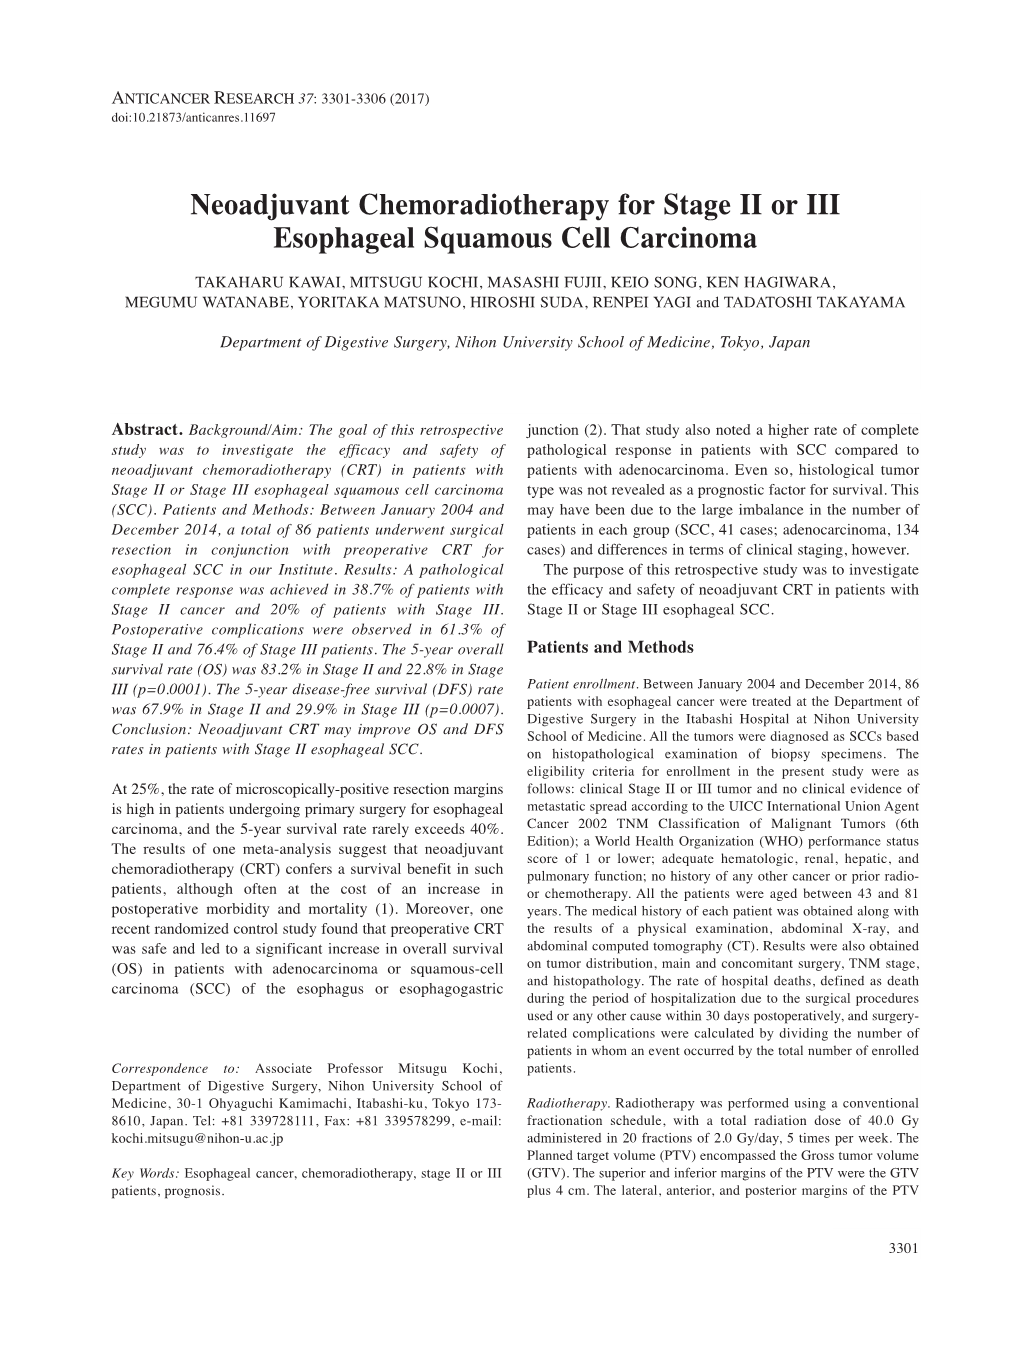 Neoadjuvant Chemoradiotherapy for Stage II Or III Esophageal